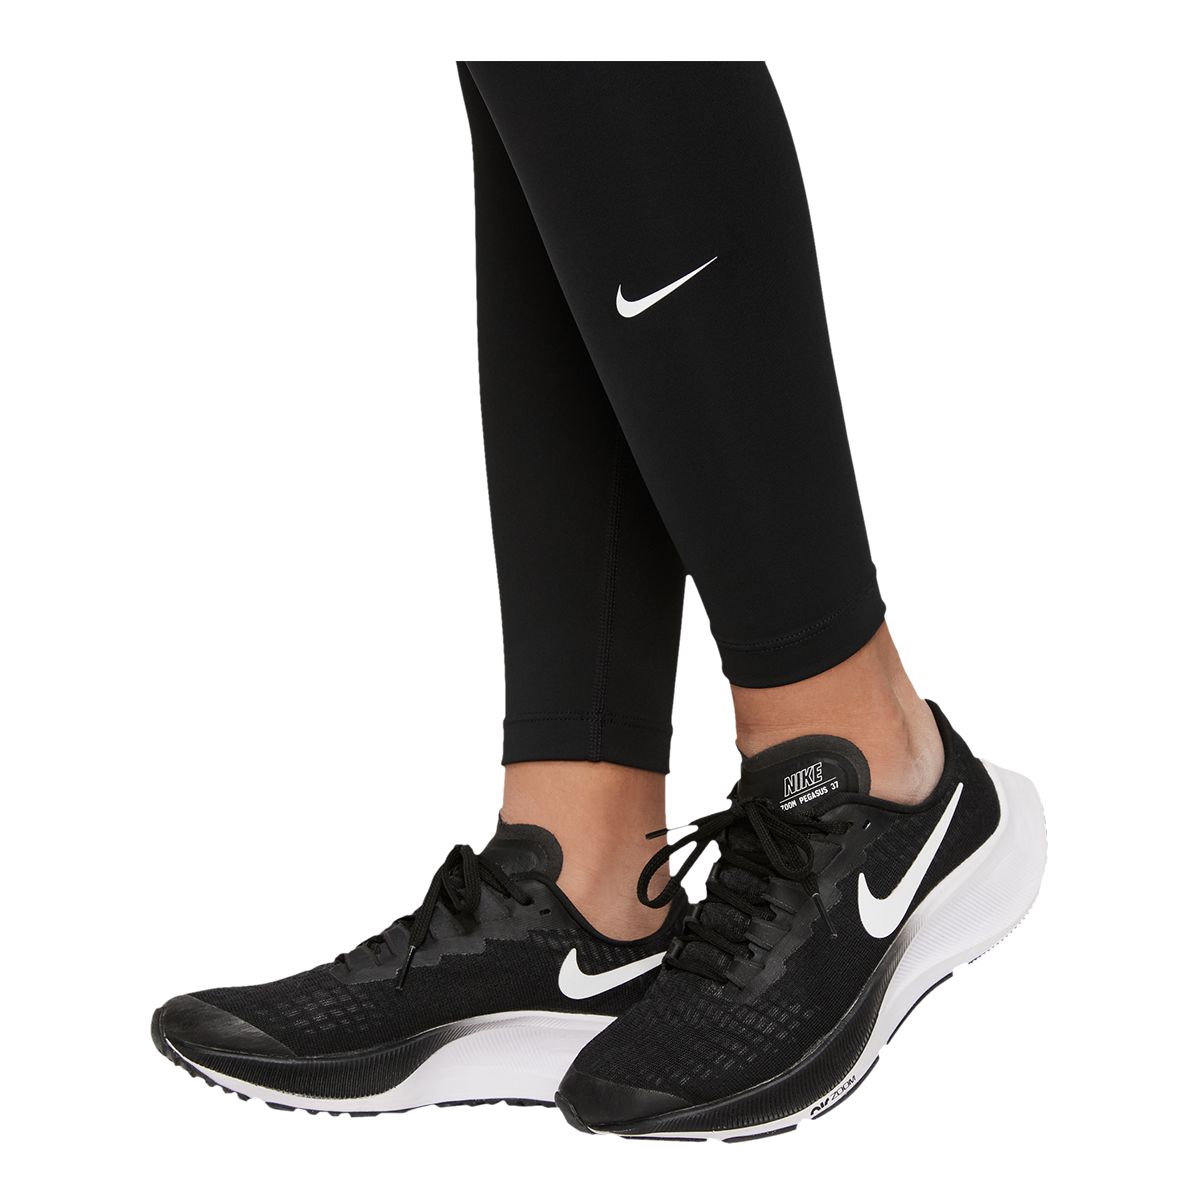 Nike Girls' Dri-FIT One Leggings